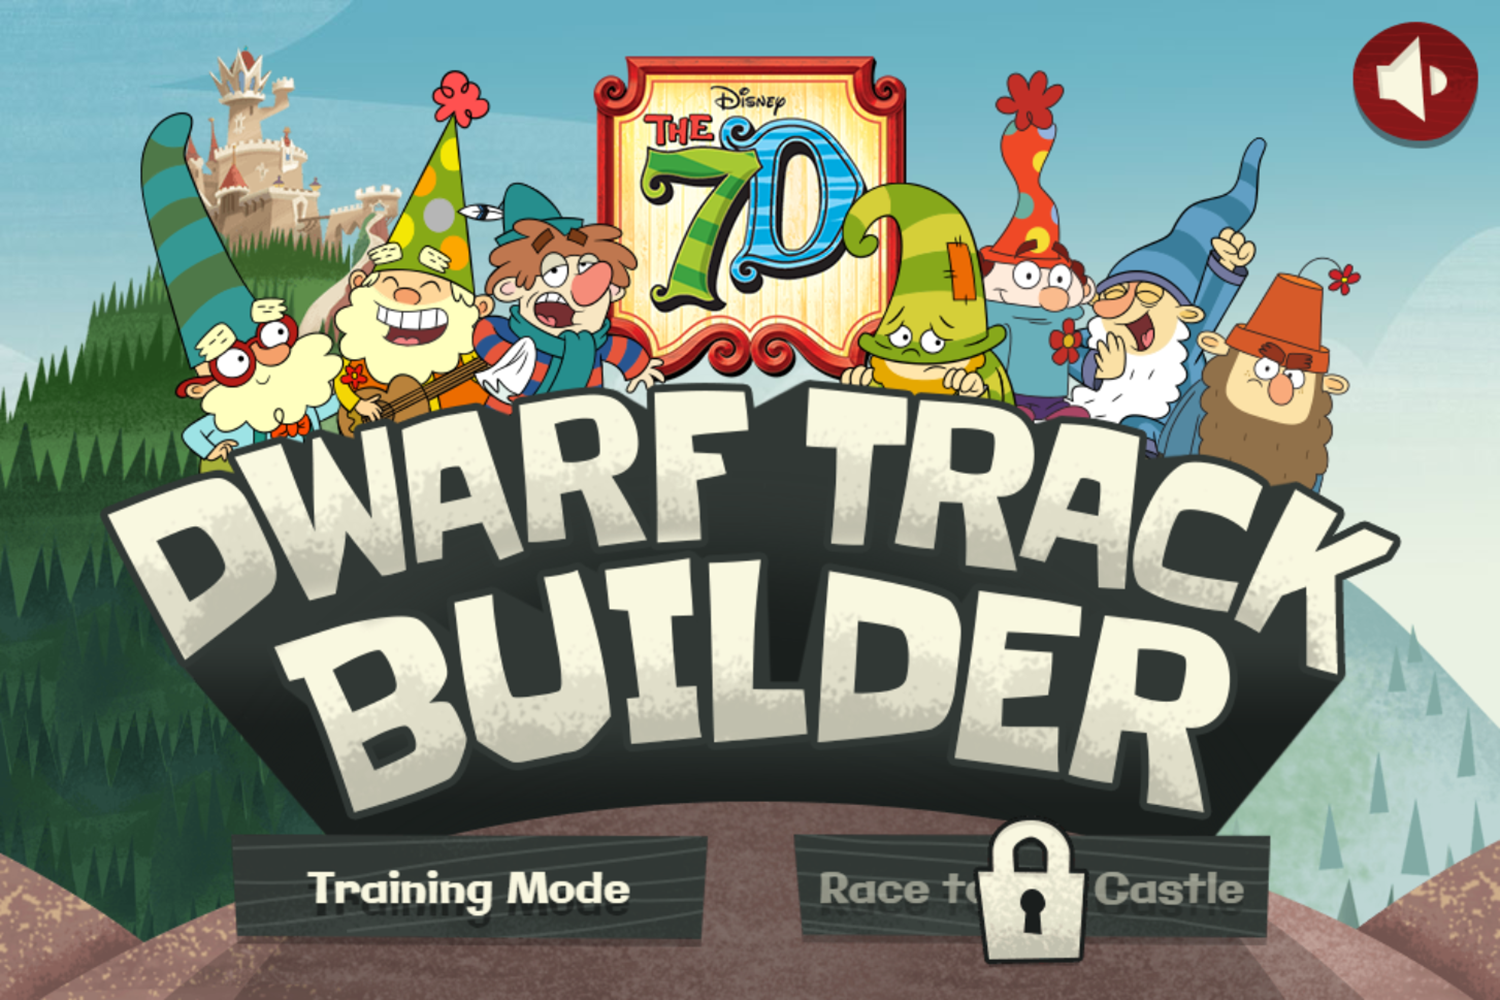 The 7D Dwarf Track Builder Game Welcome Screen Screenshot.